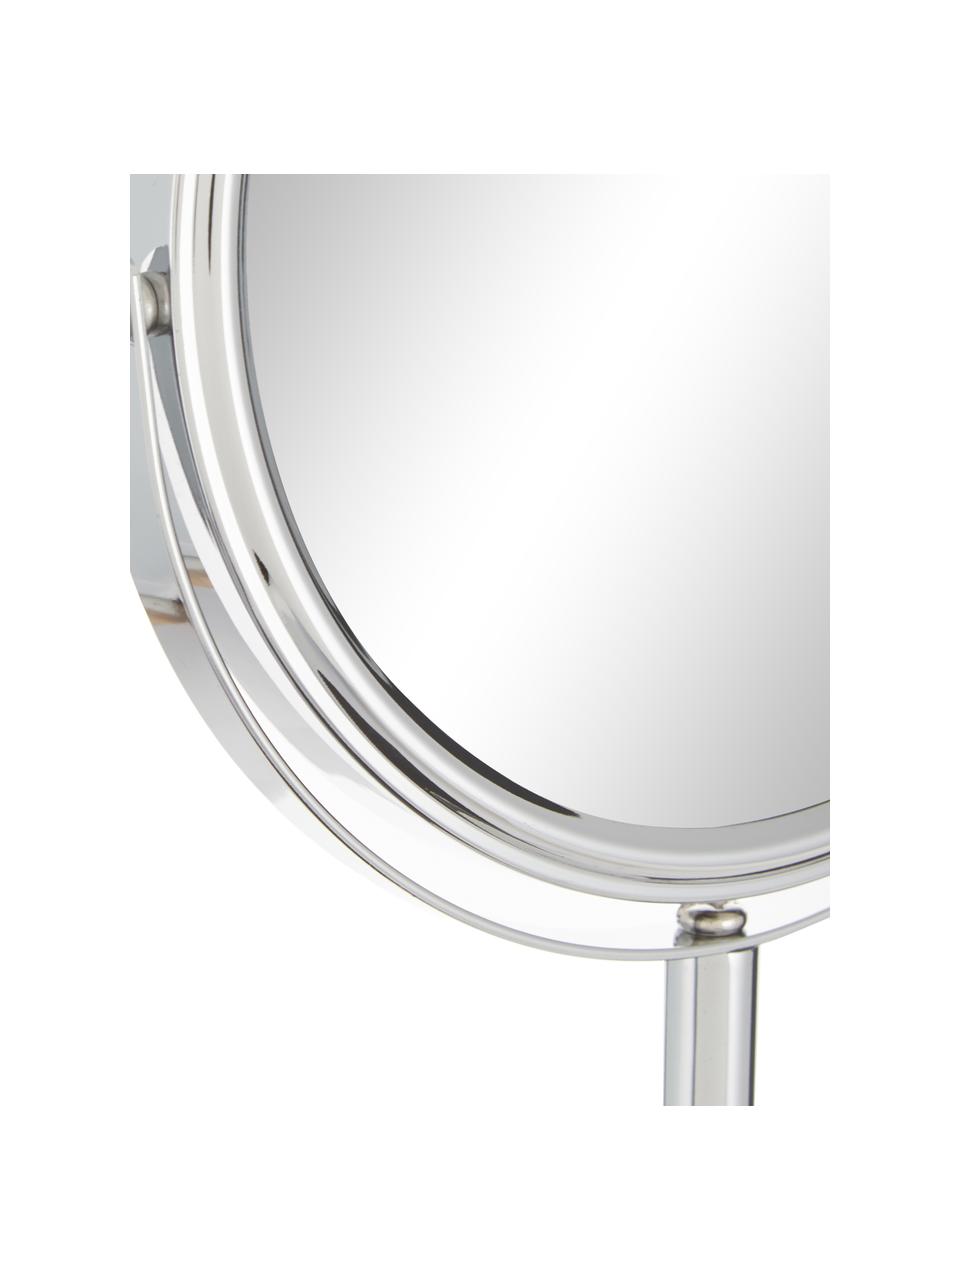 Make-up spiegel Copper met vergroting, Voet: marmer, Frame: verchroomd metaal, Wit, zilverkleurig, Ø 20 x H 34 cm